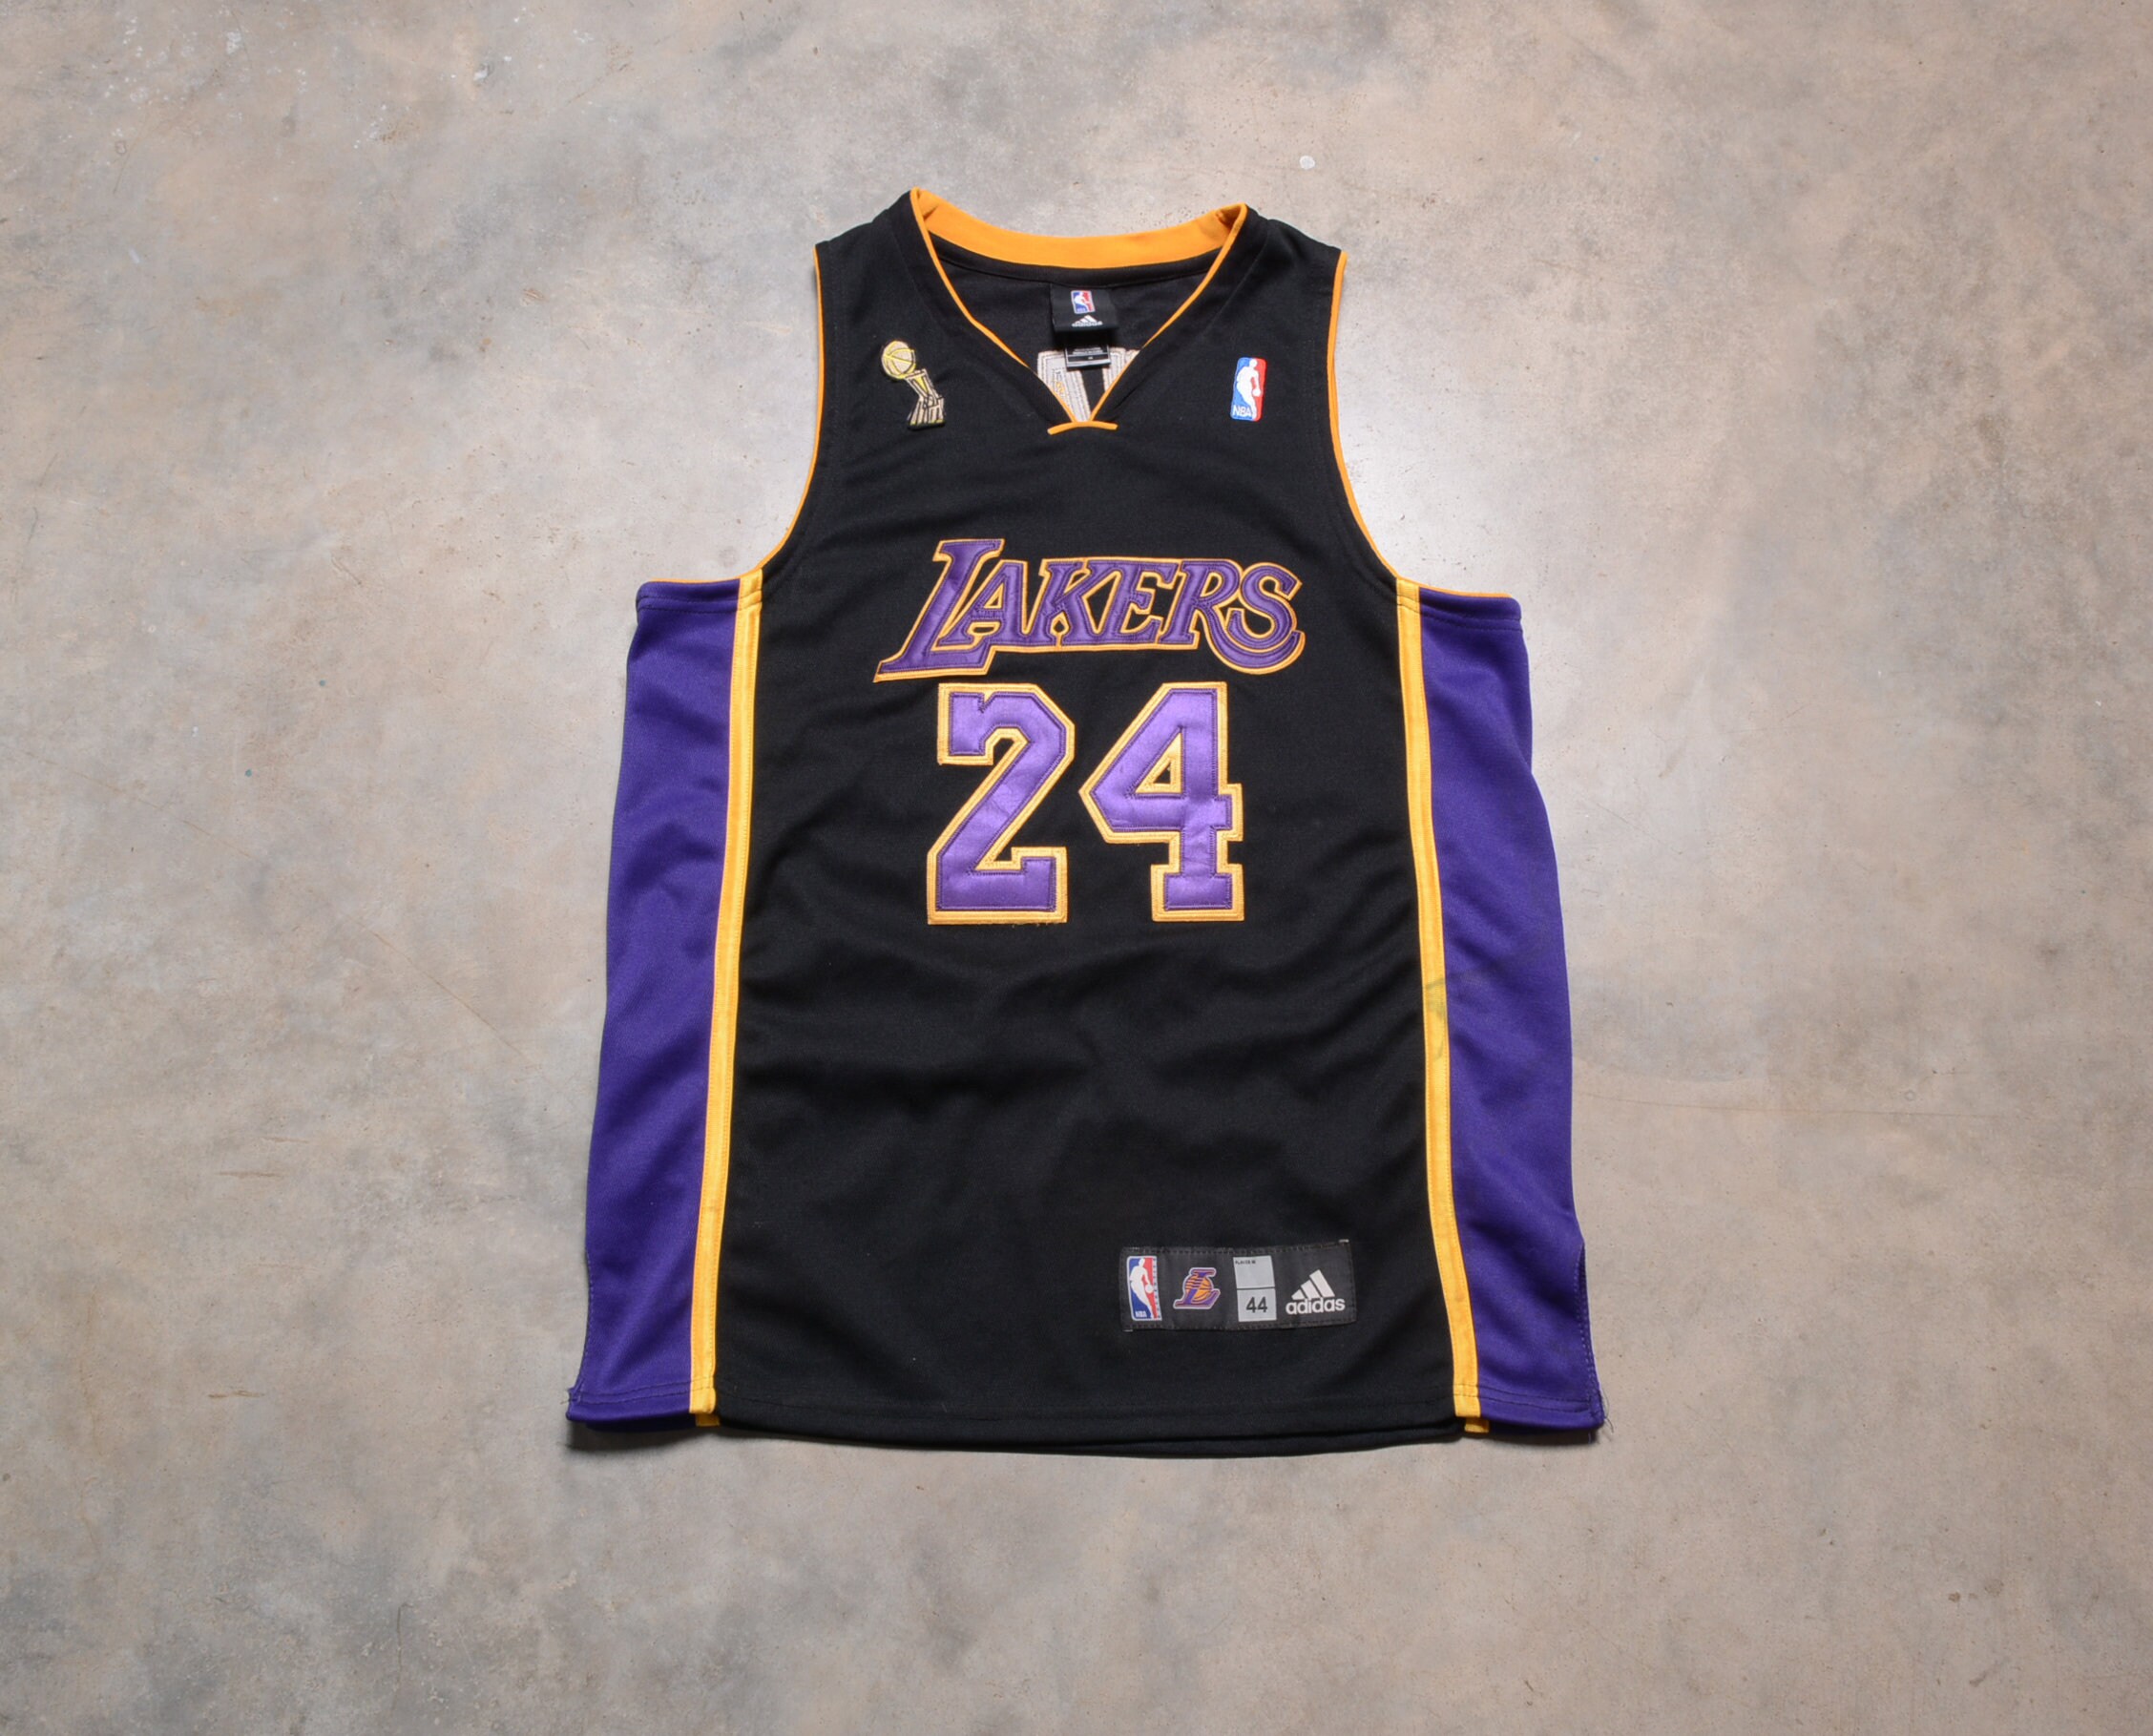 Kobe Bryant #24 Adidas Authentic Lakers Jersey Size 44